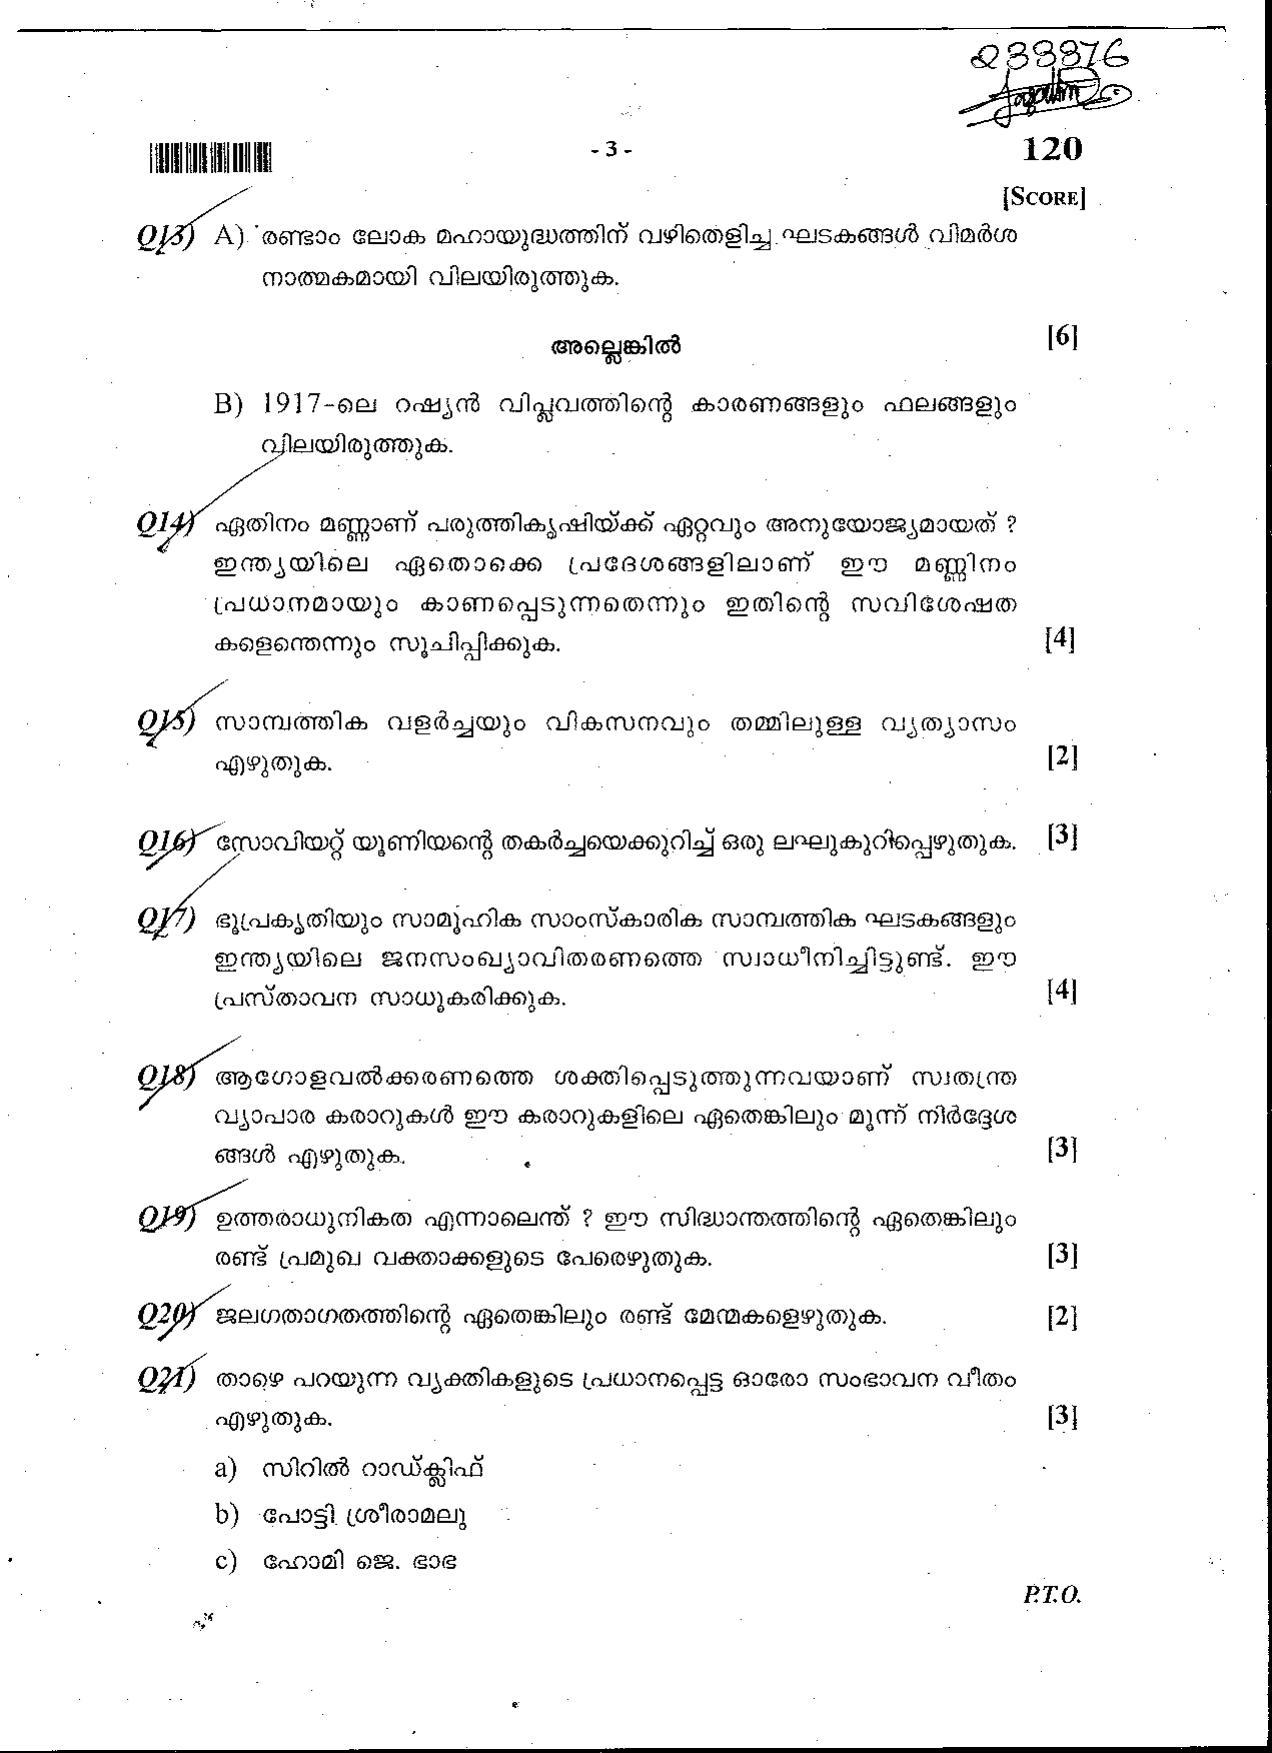 Kerala SSLC 2015 Social Science (MM) Question Paper - Page 3